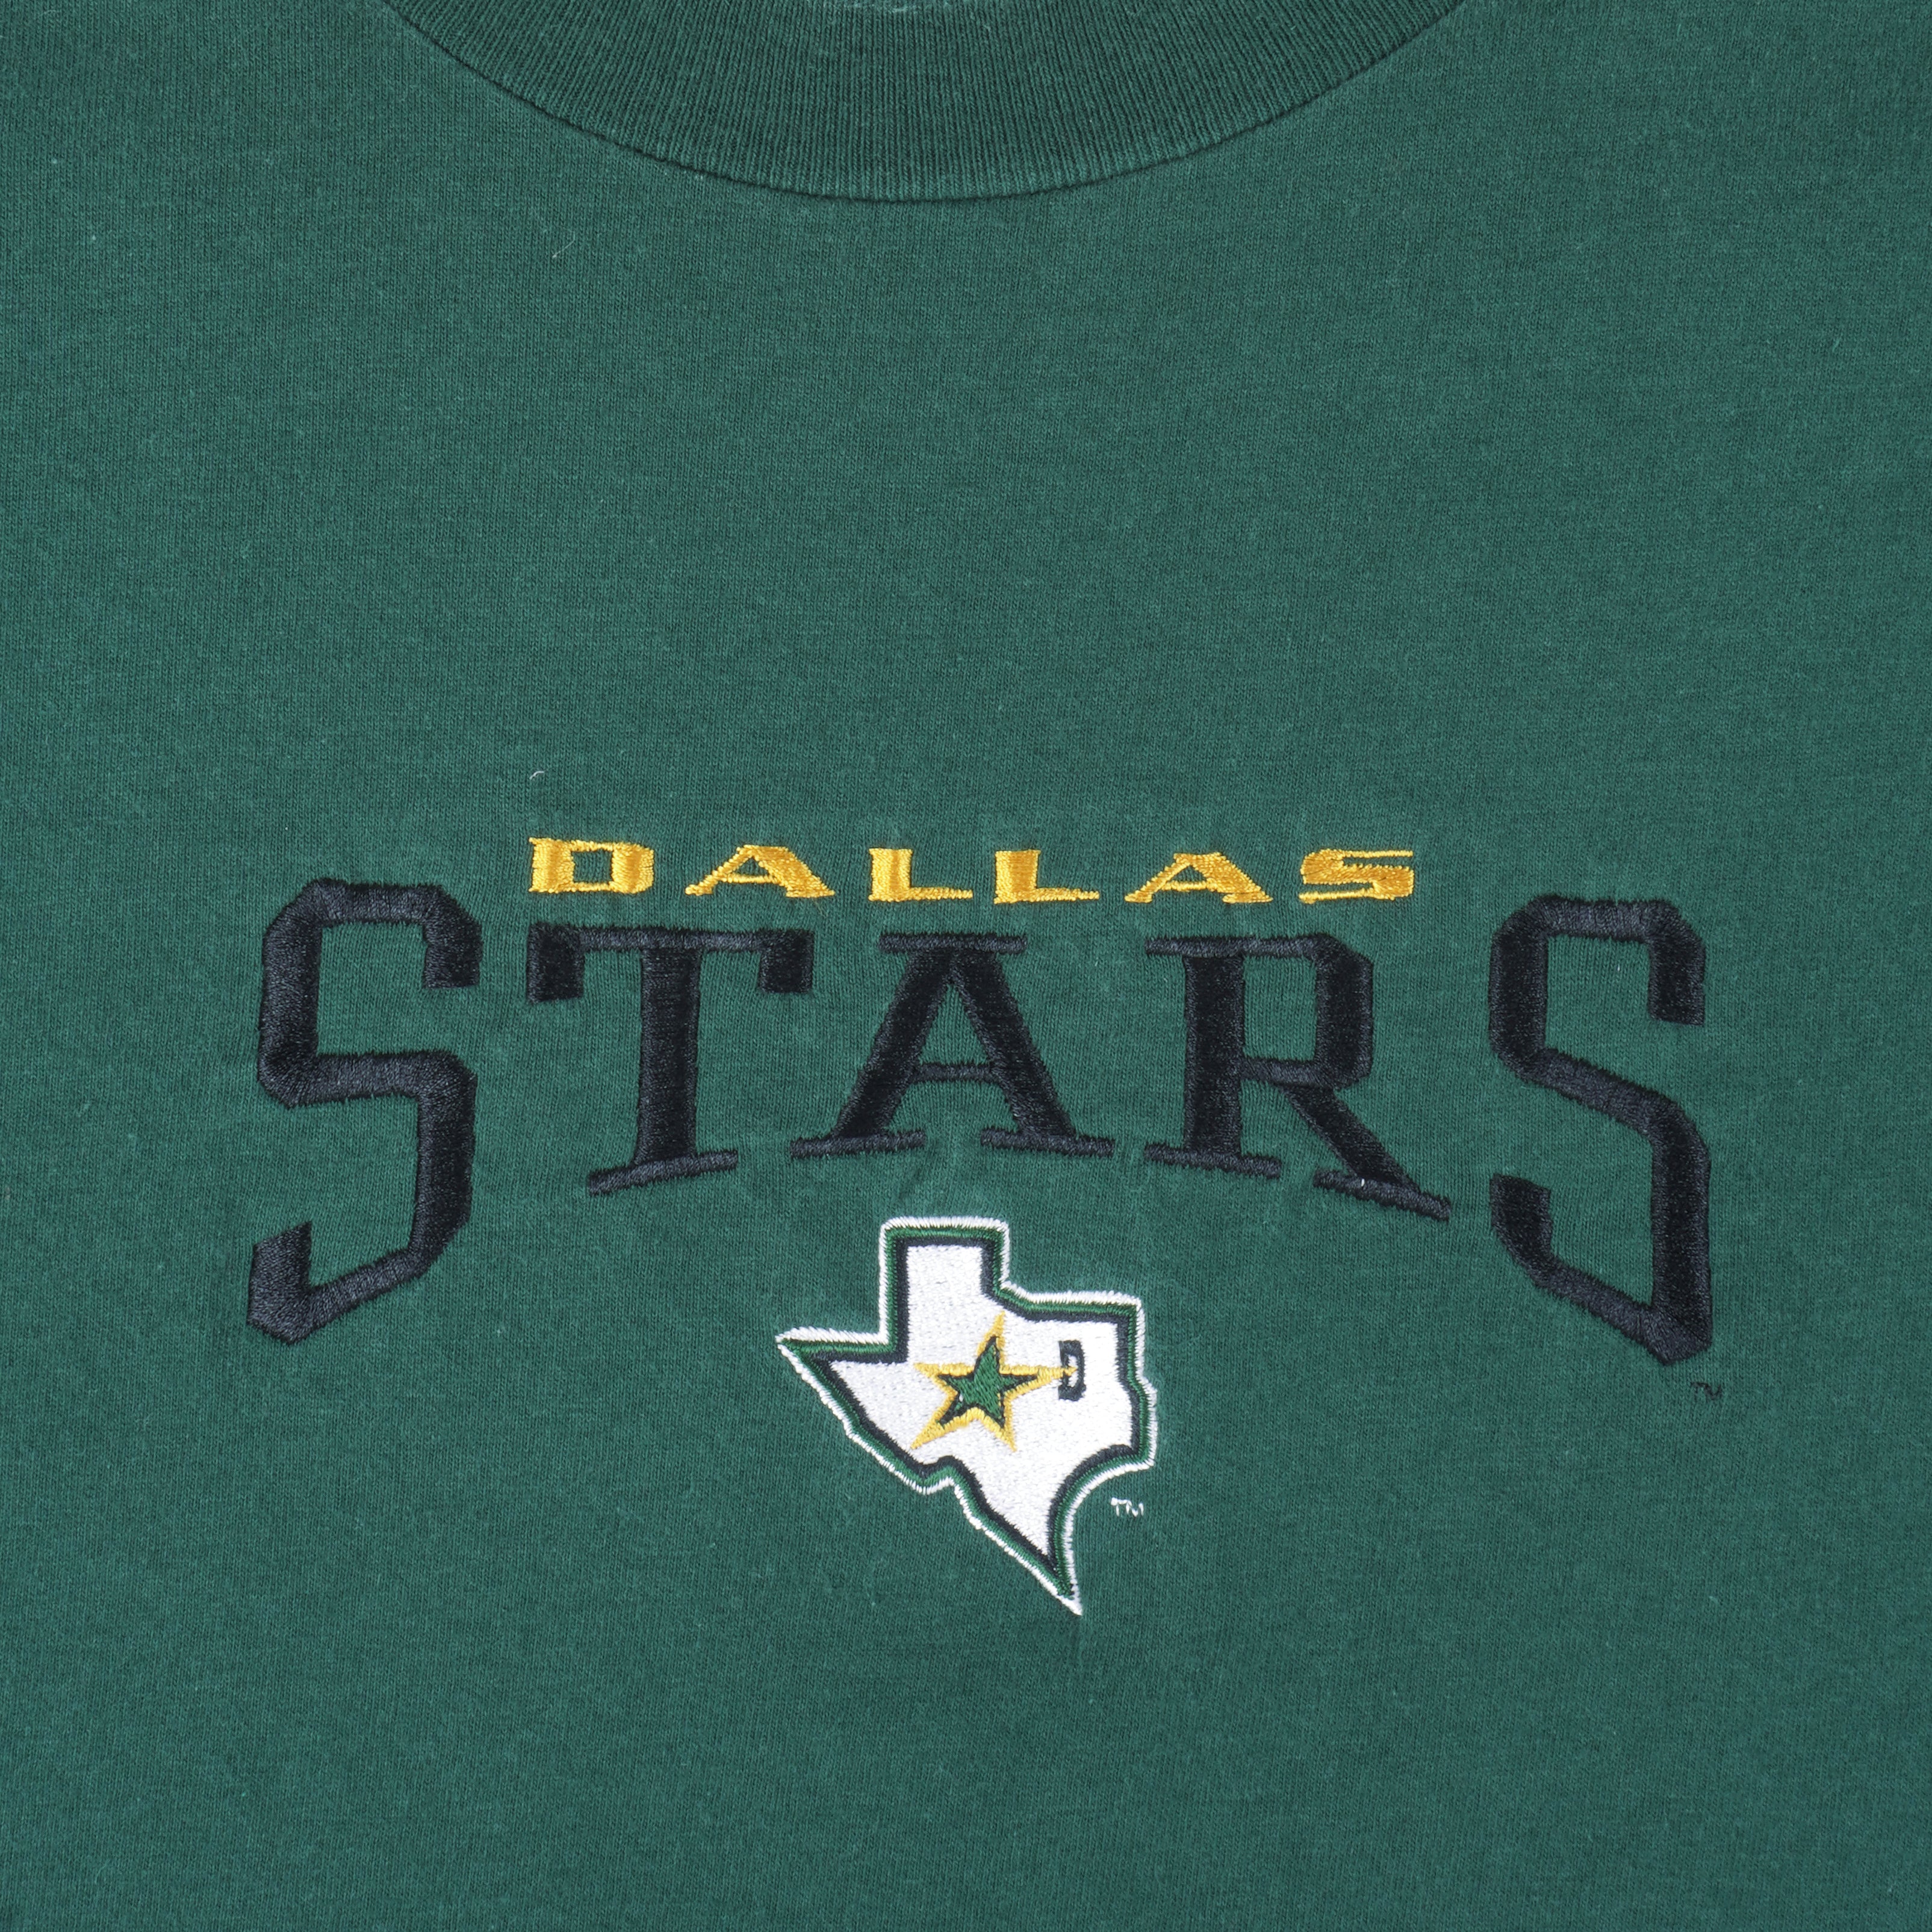 Vintage 90s Dallas Stars Hockey Embroidered Sweatshirt Size XL 